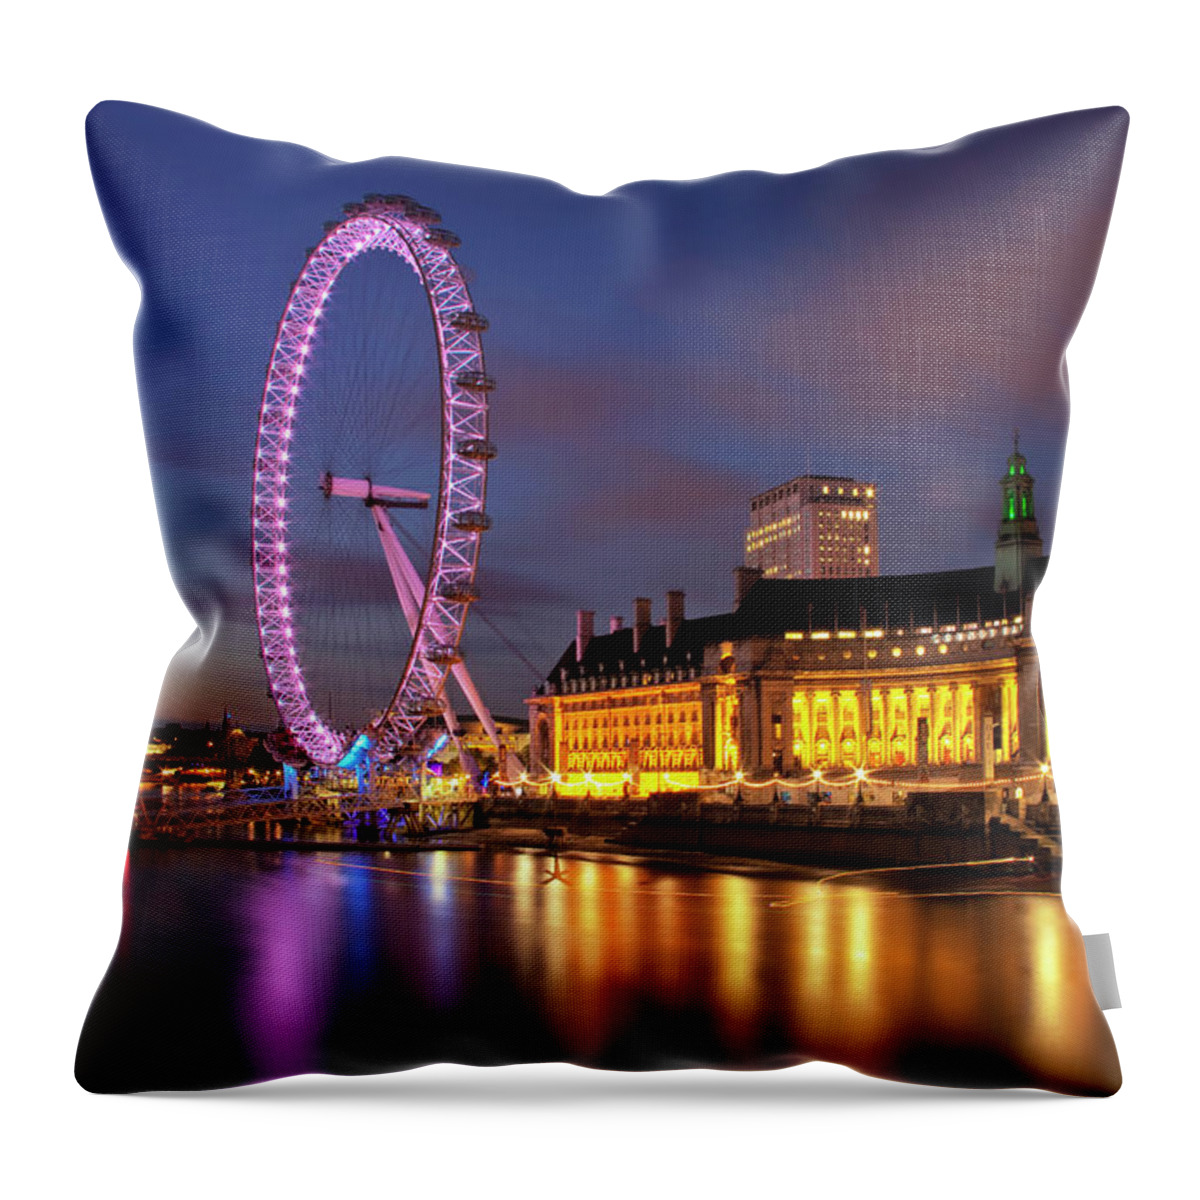 Amusement Park Throw Pillow featuring the photograph London Eye by Stuart Stevenson Photography